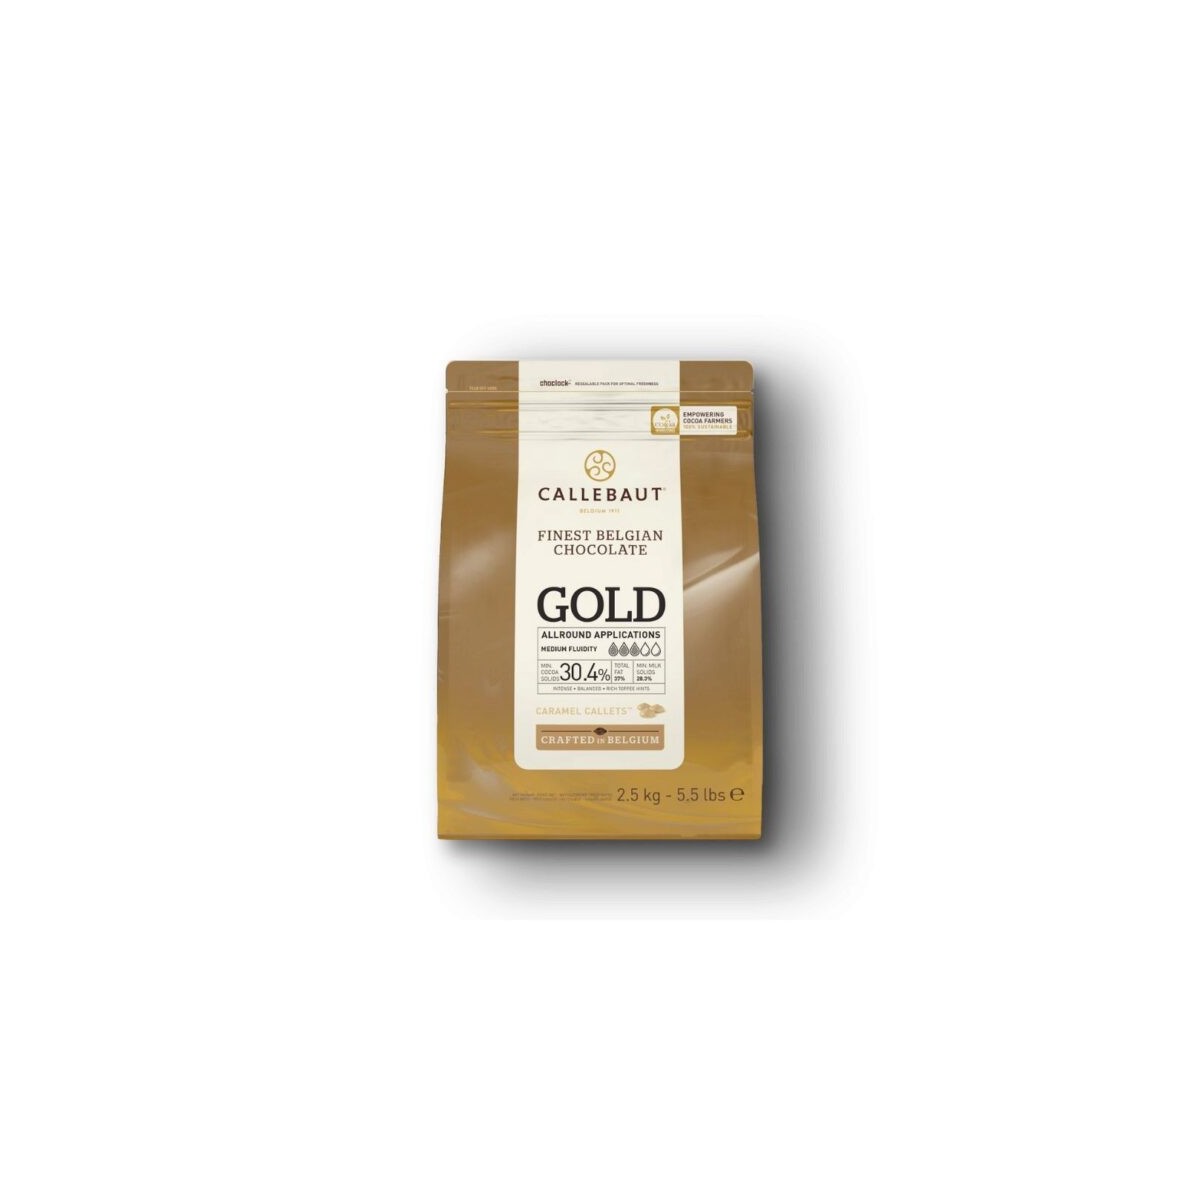 Chocolat caramel Gold 30.4% 2.5kg